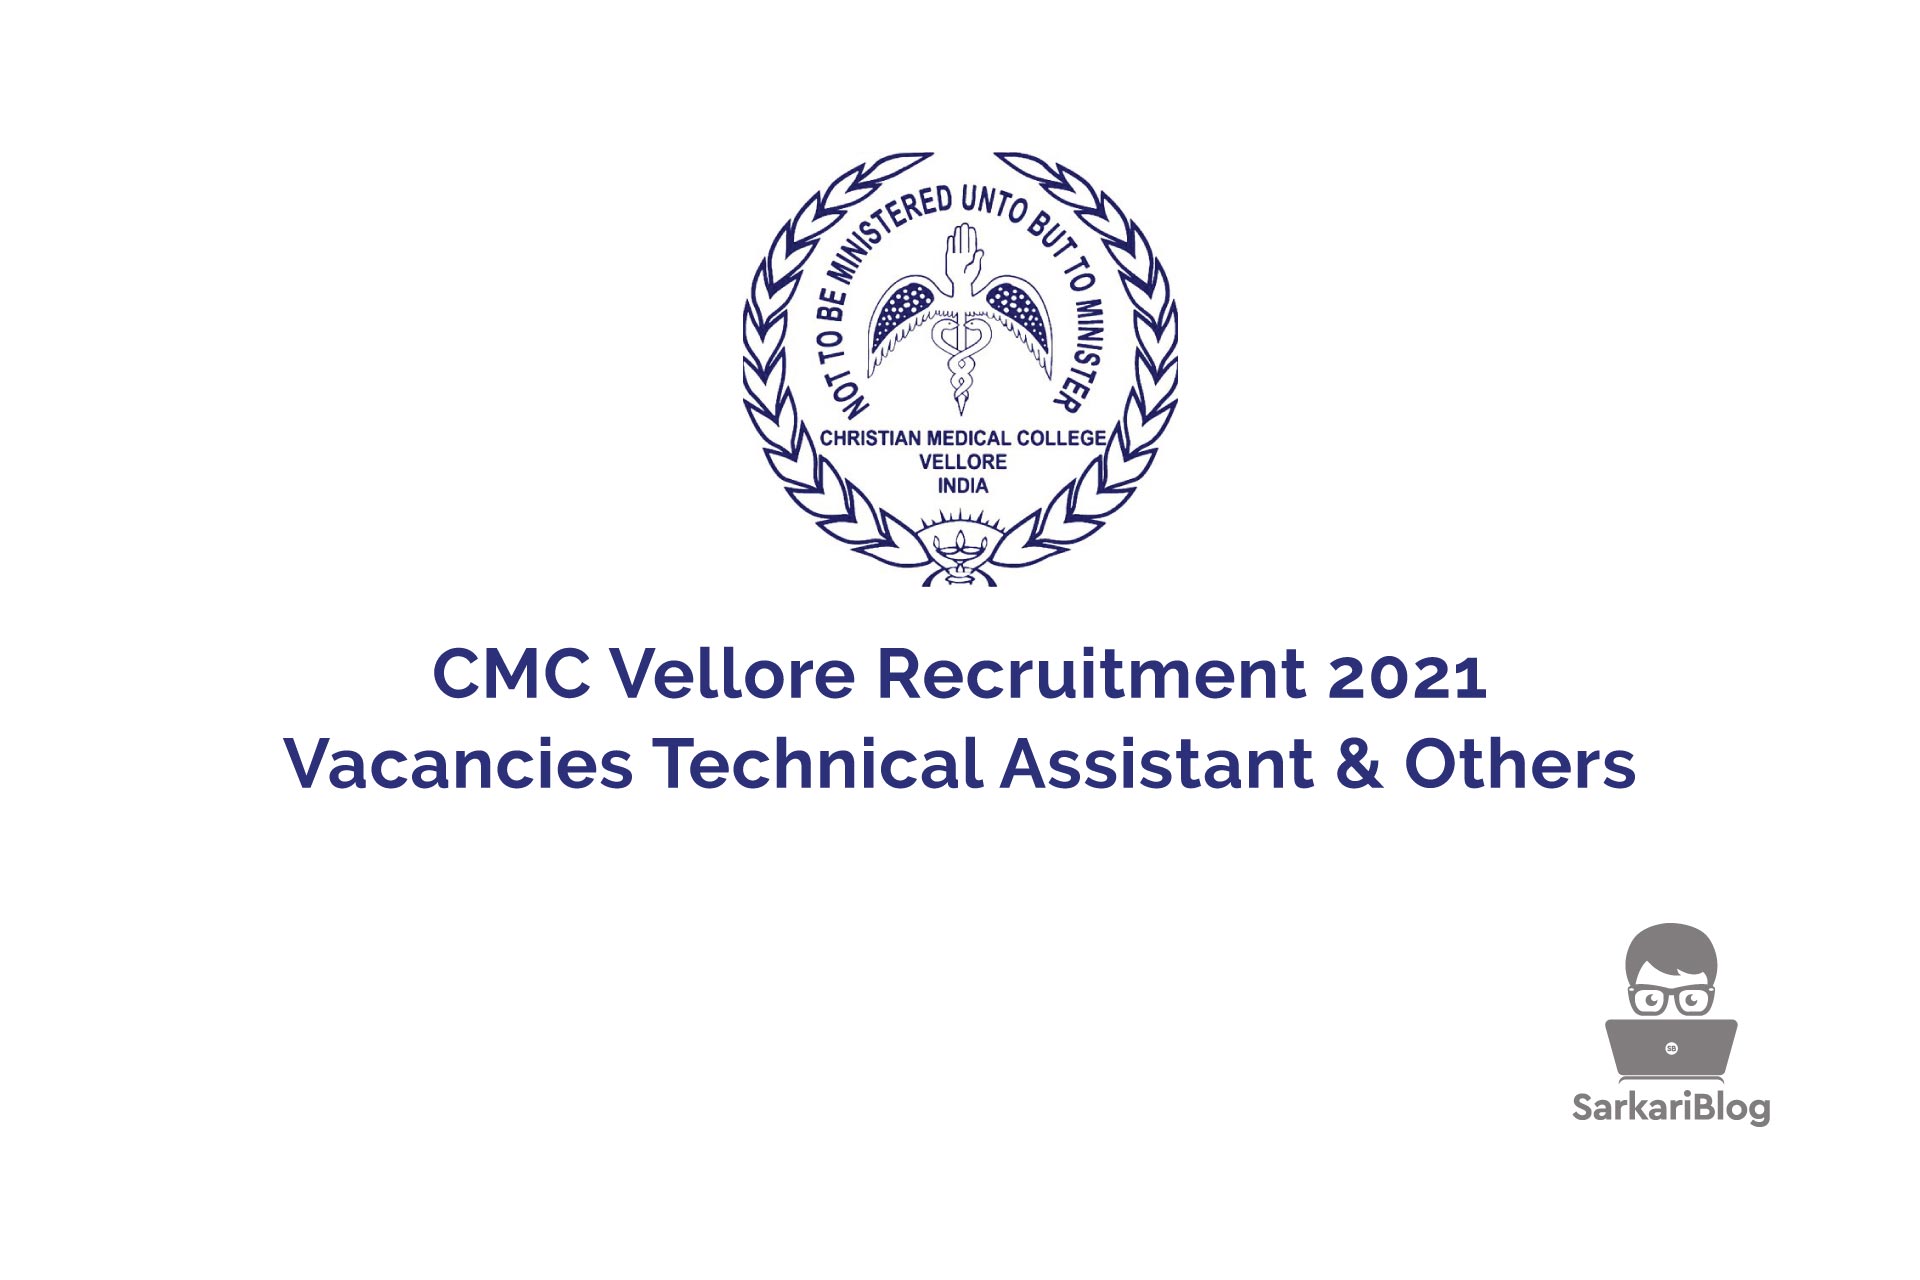 CMC Vellore Recruitment 2021, Vacancies Technical Assistant & Others